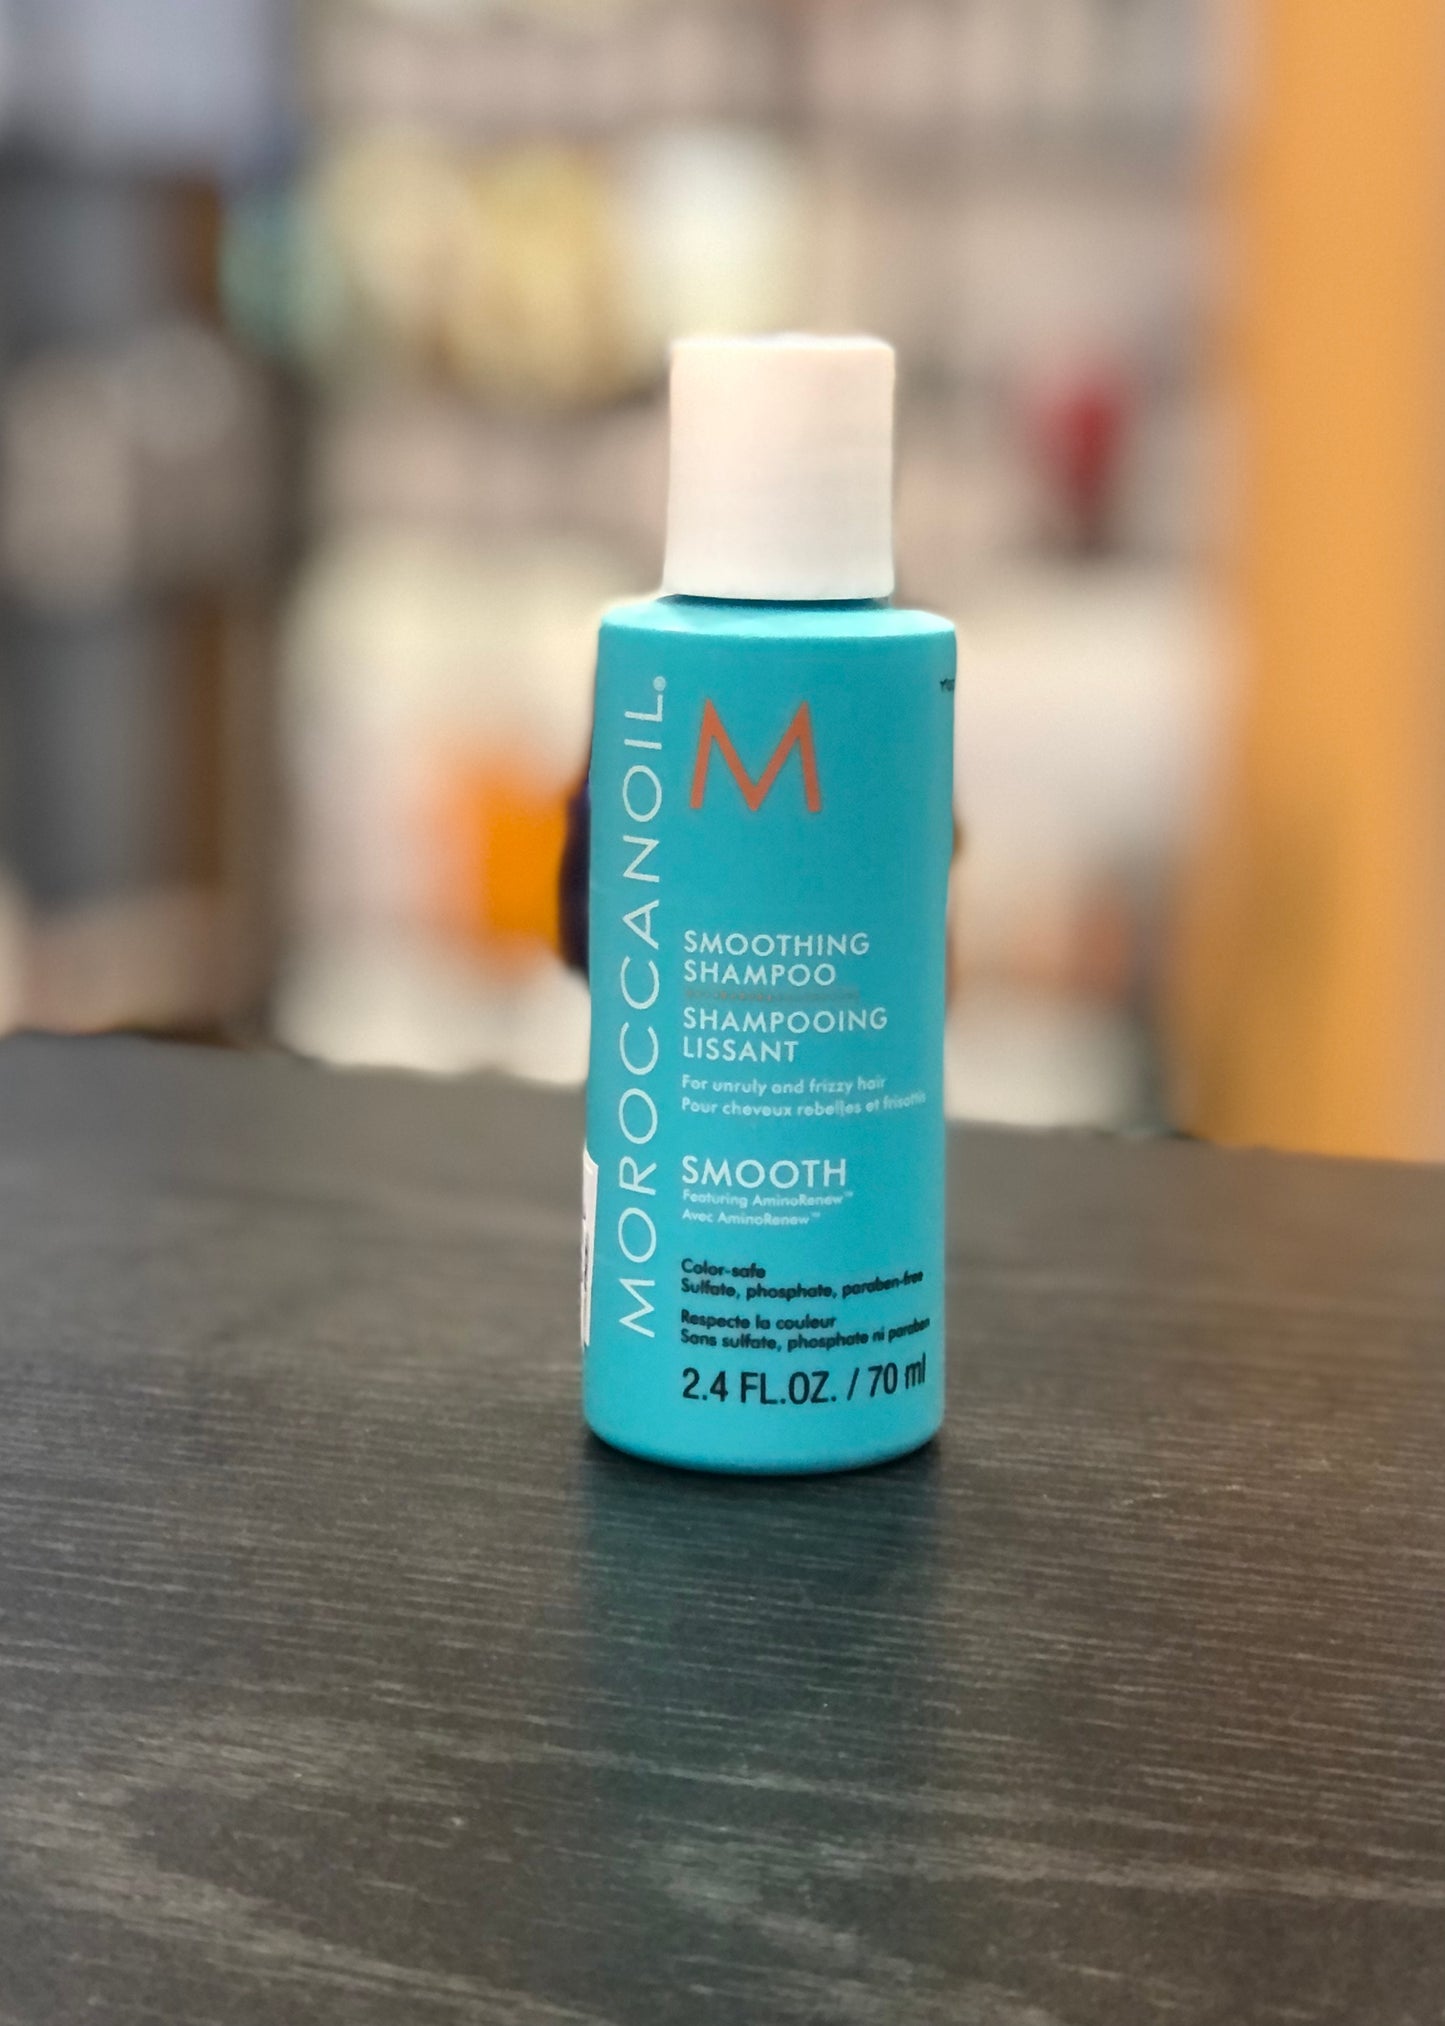 Moroccanoil - Smoothing shampoo 2.4 fl. oz./ 70 ml